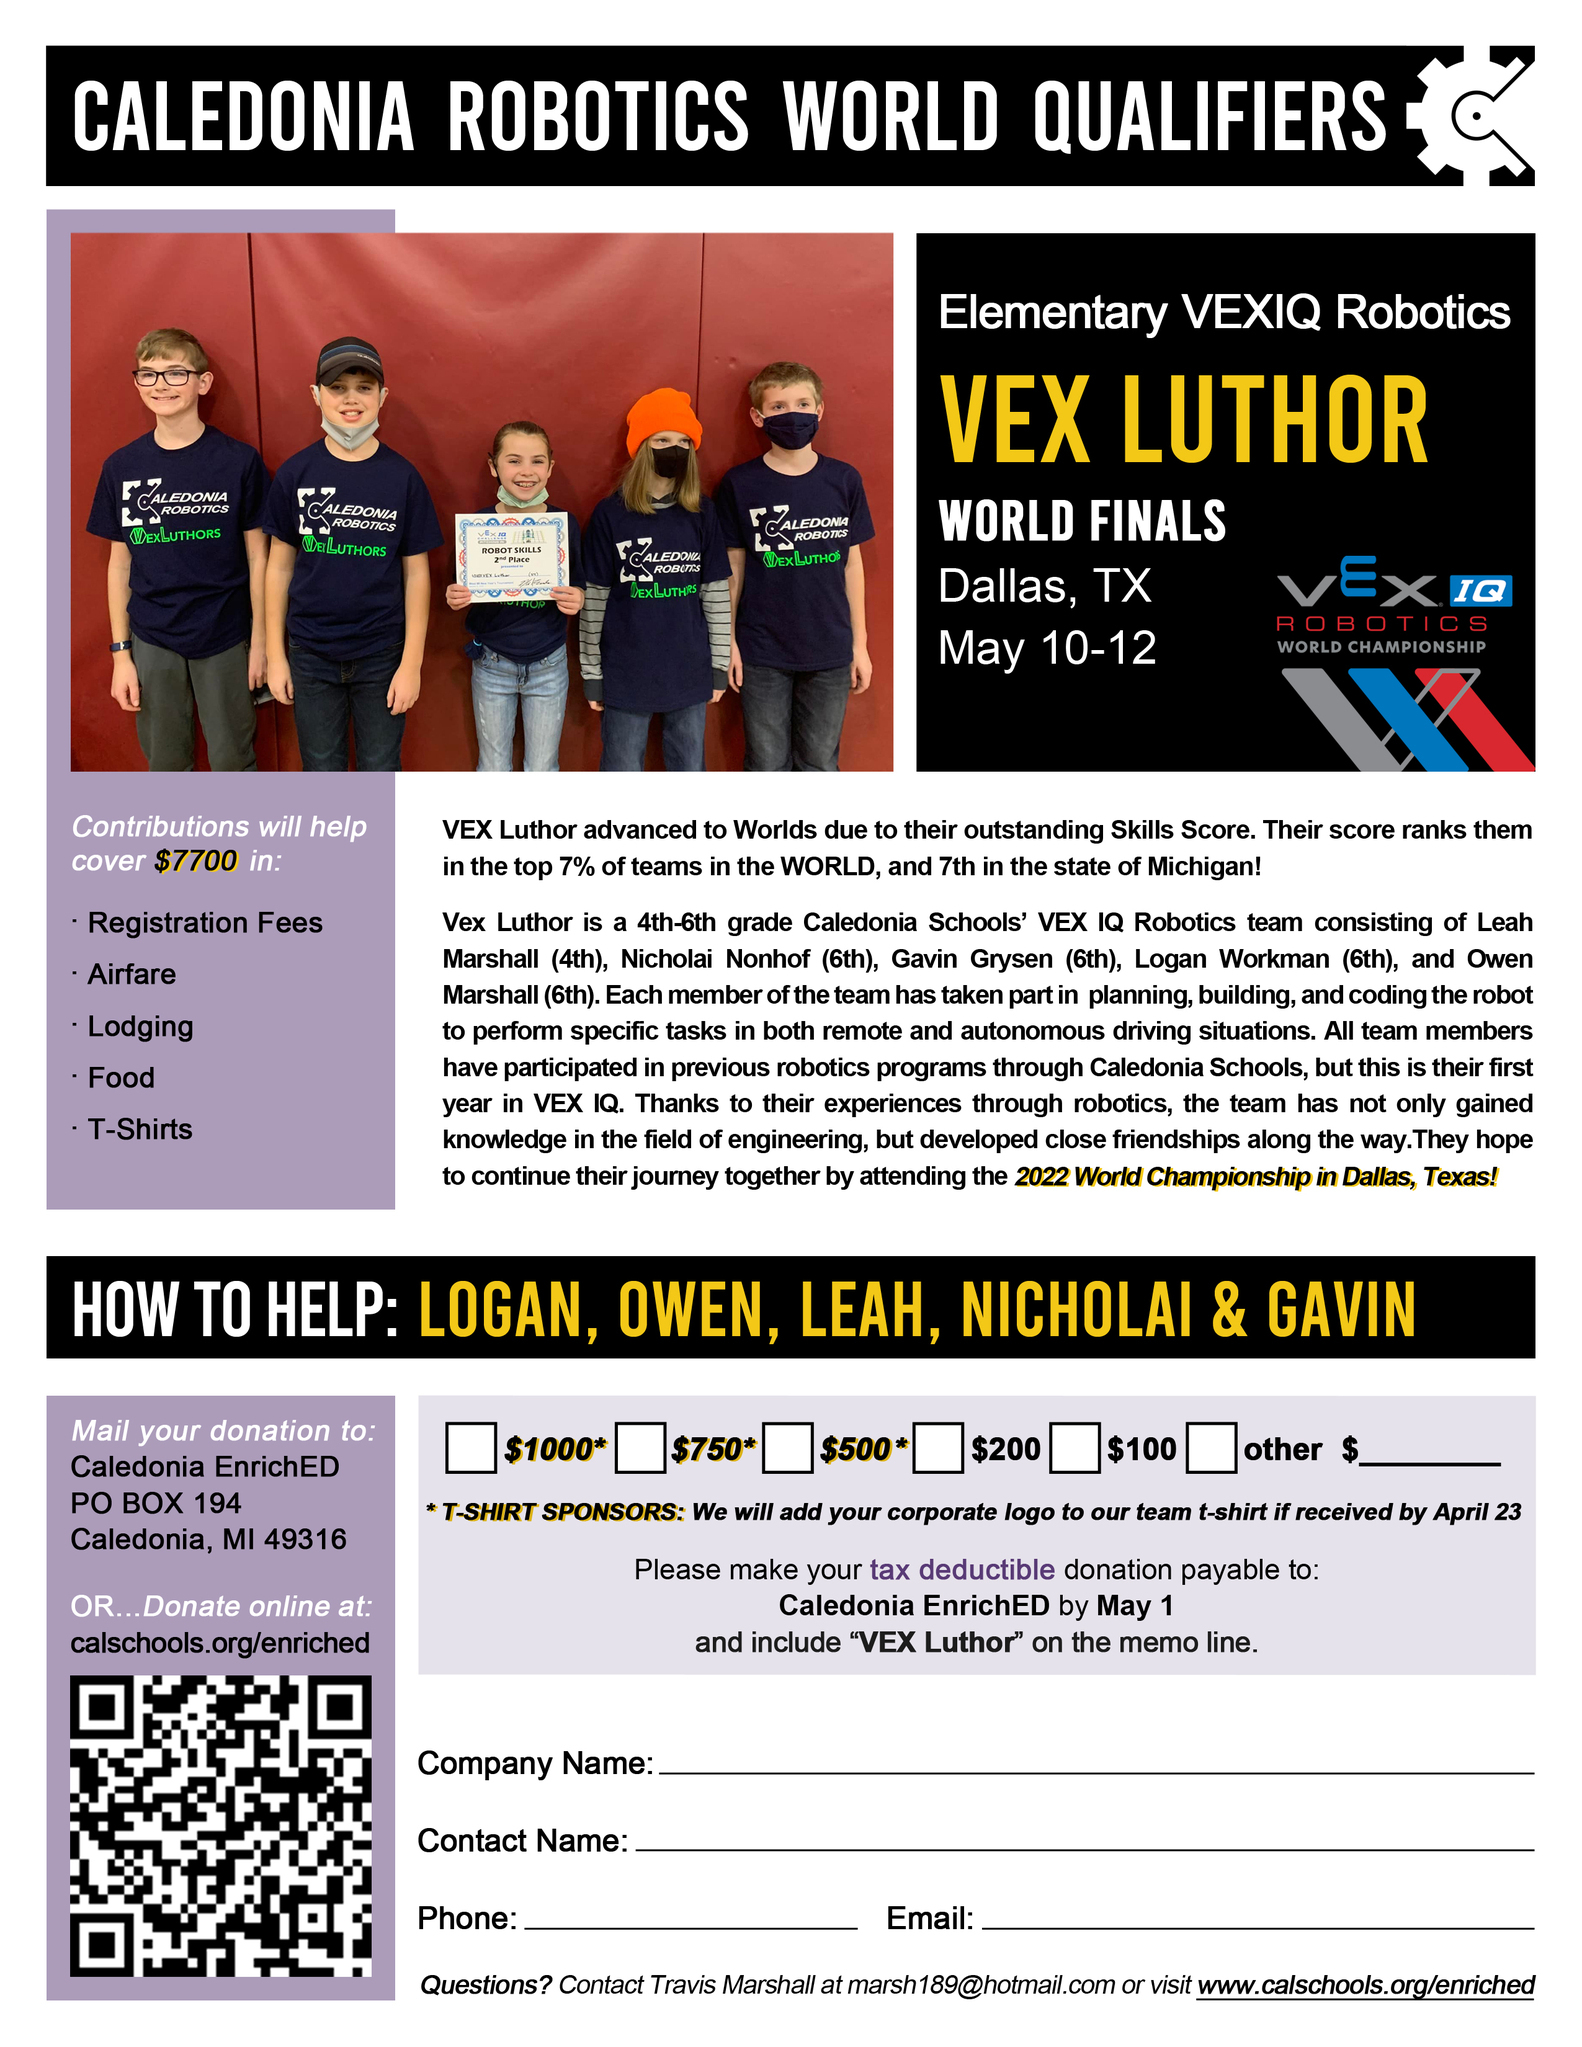 Team Letter_VEX Luthor